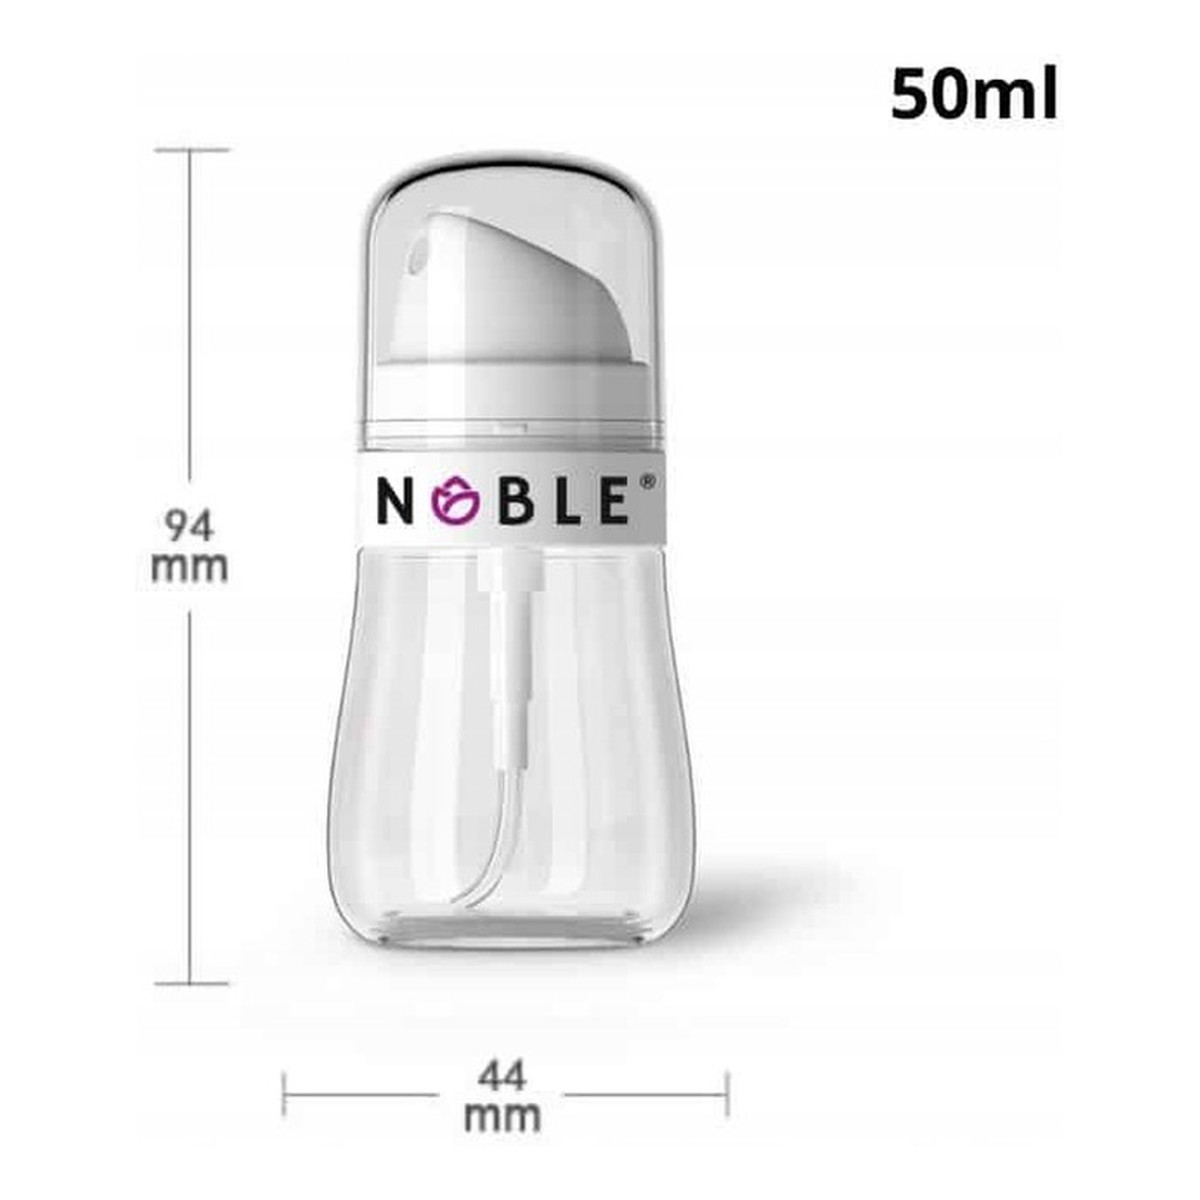 Noble Butelka z atomizerem Biała 50ml